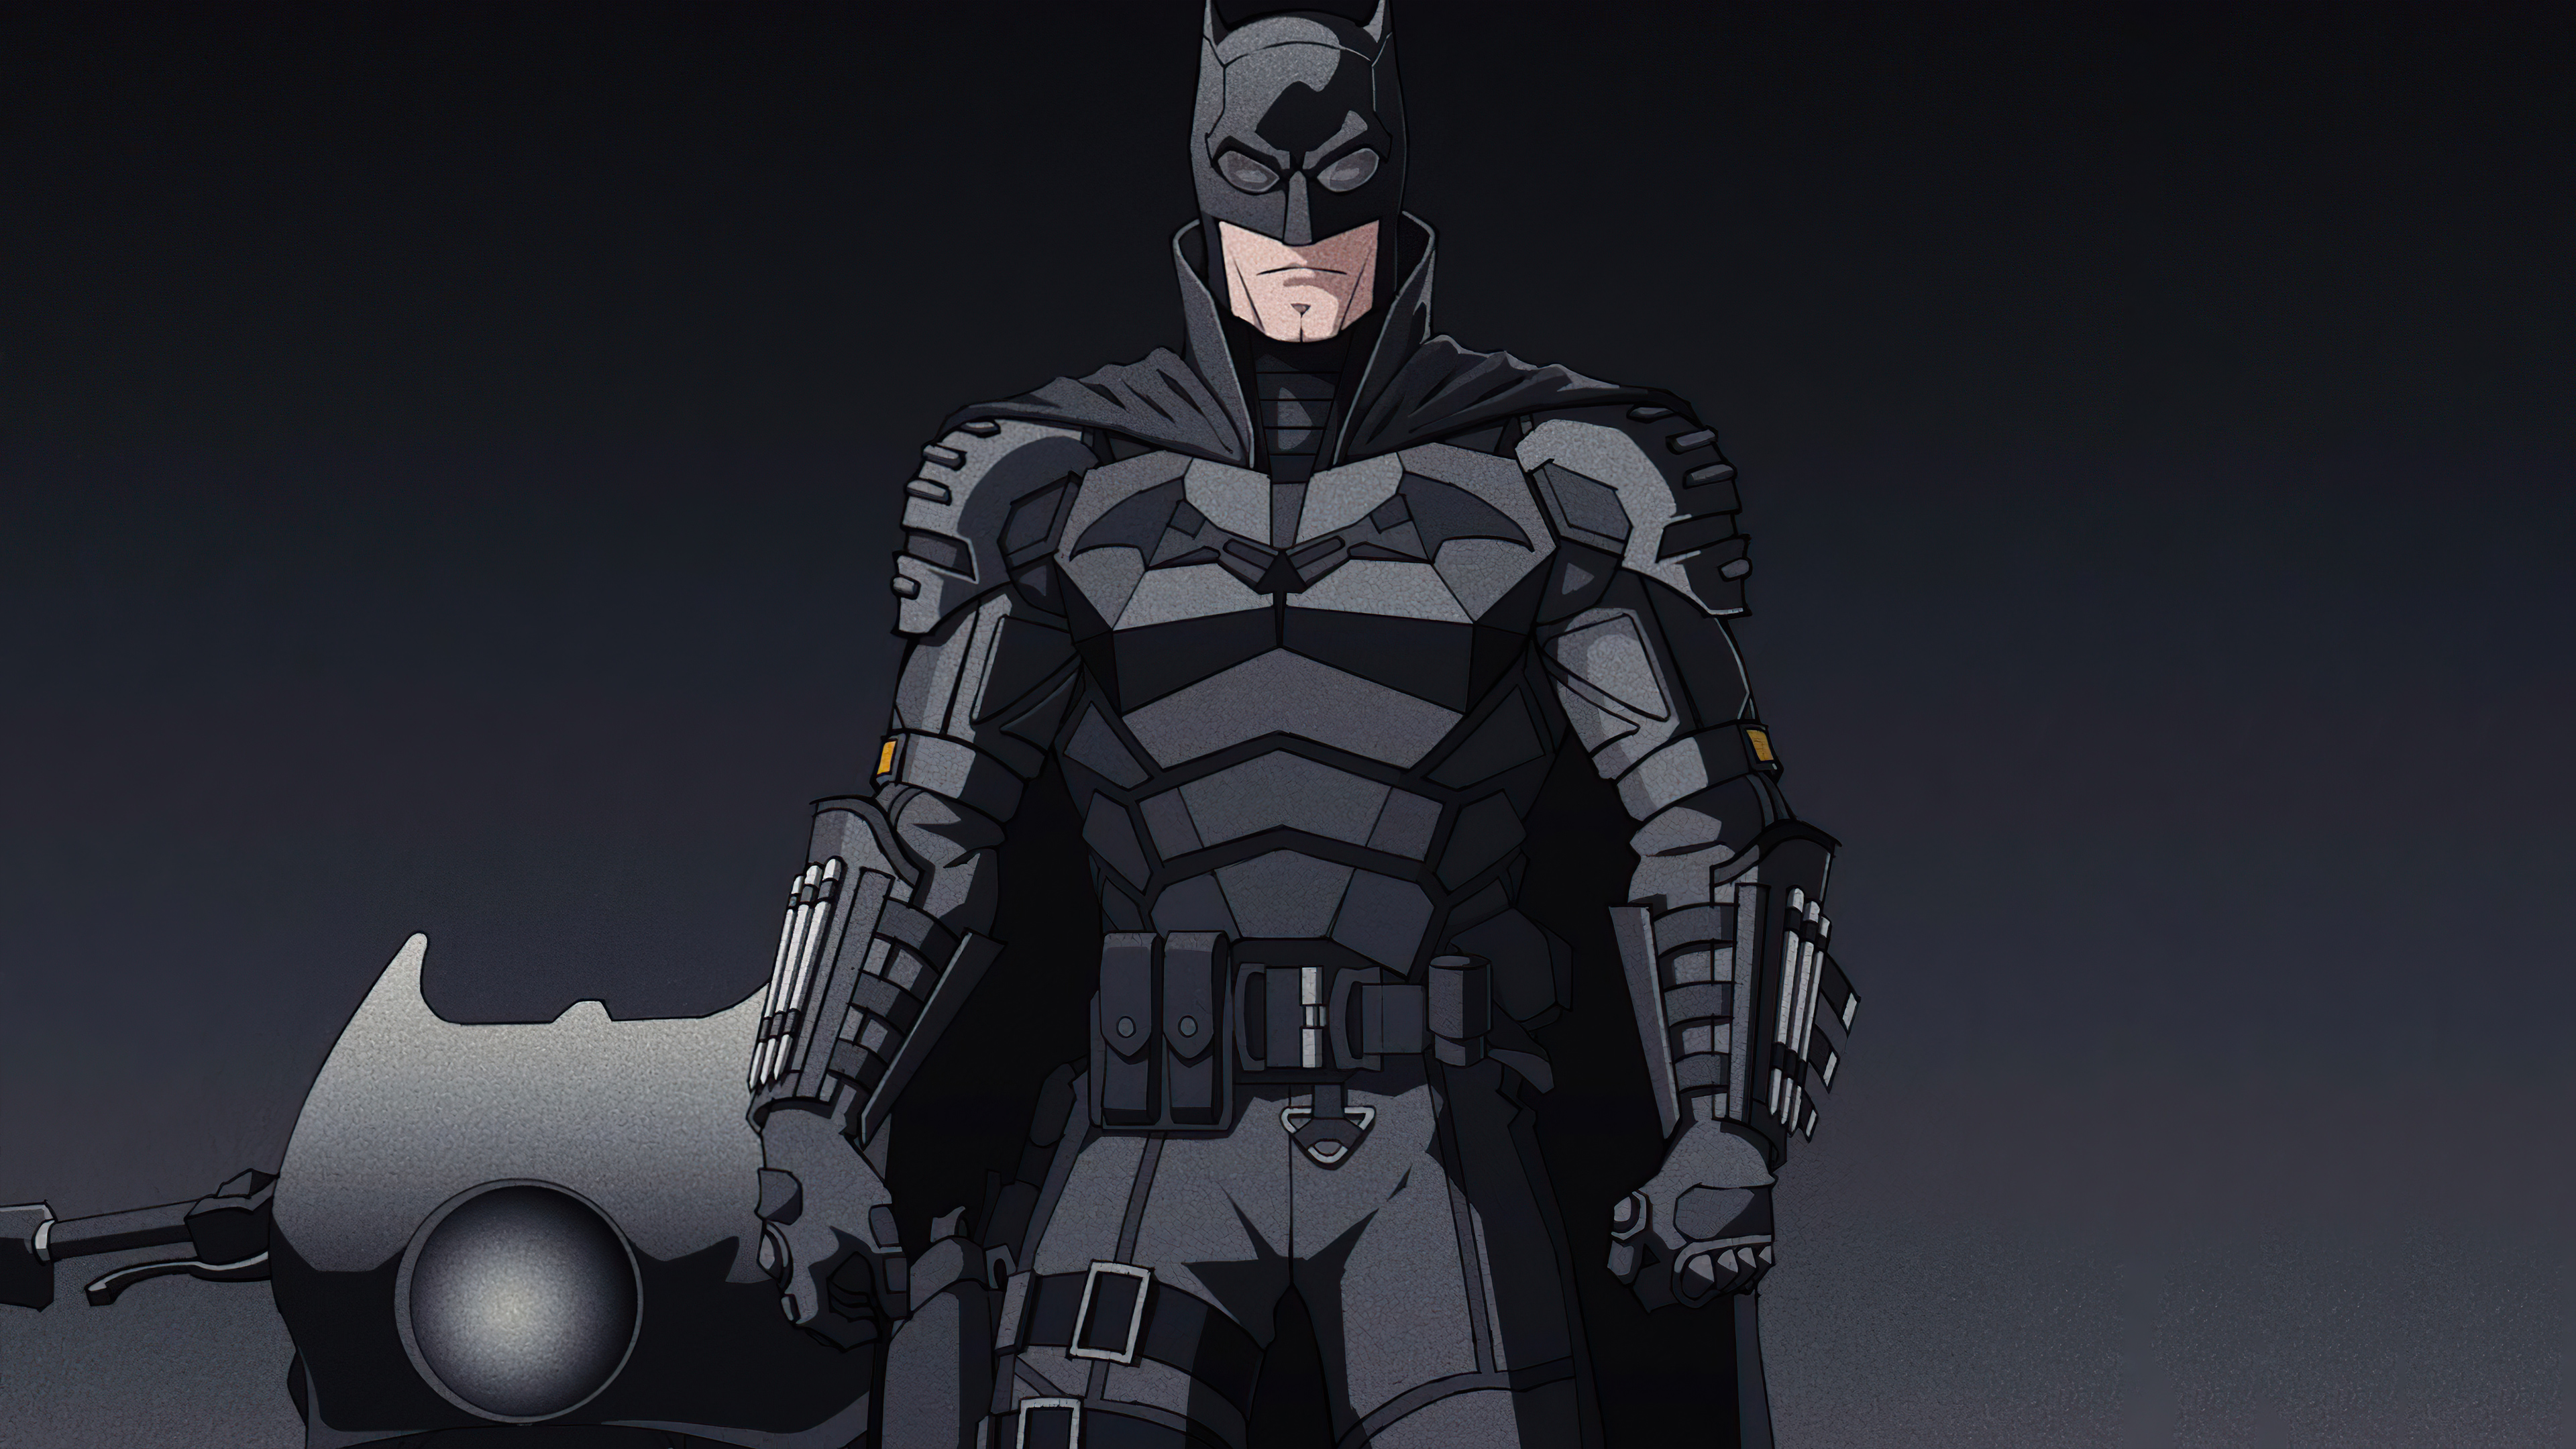 Batman with bike Wallpaper 4k Ultra HD ID:9004